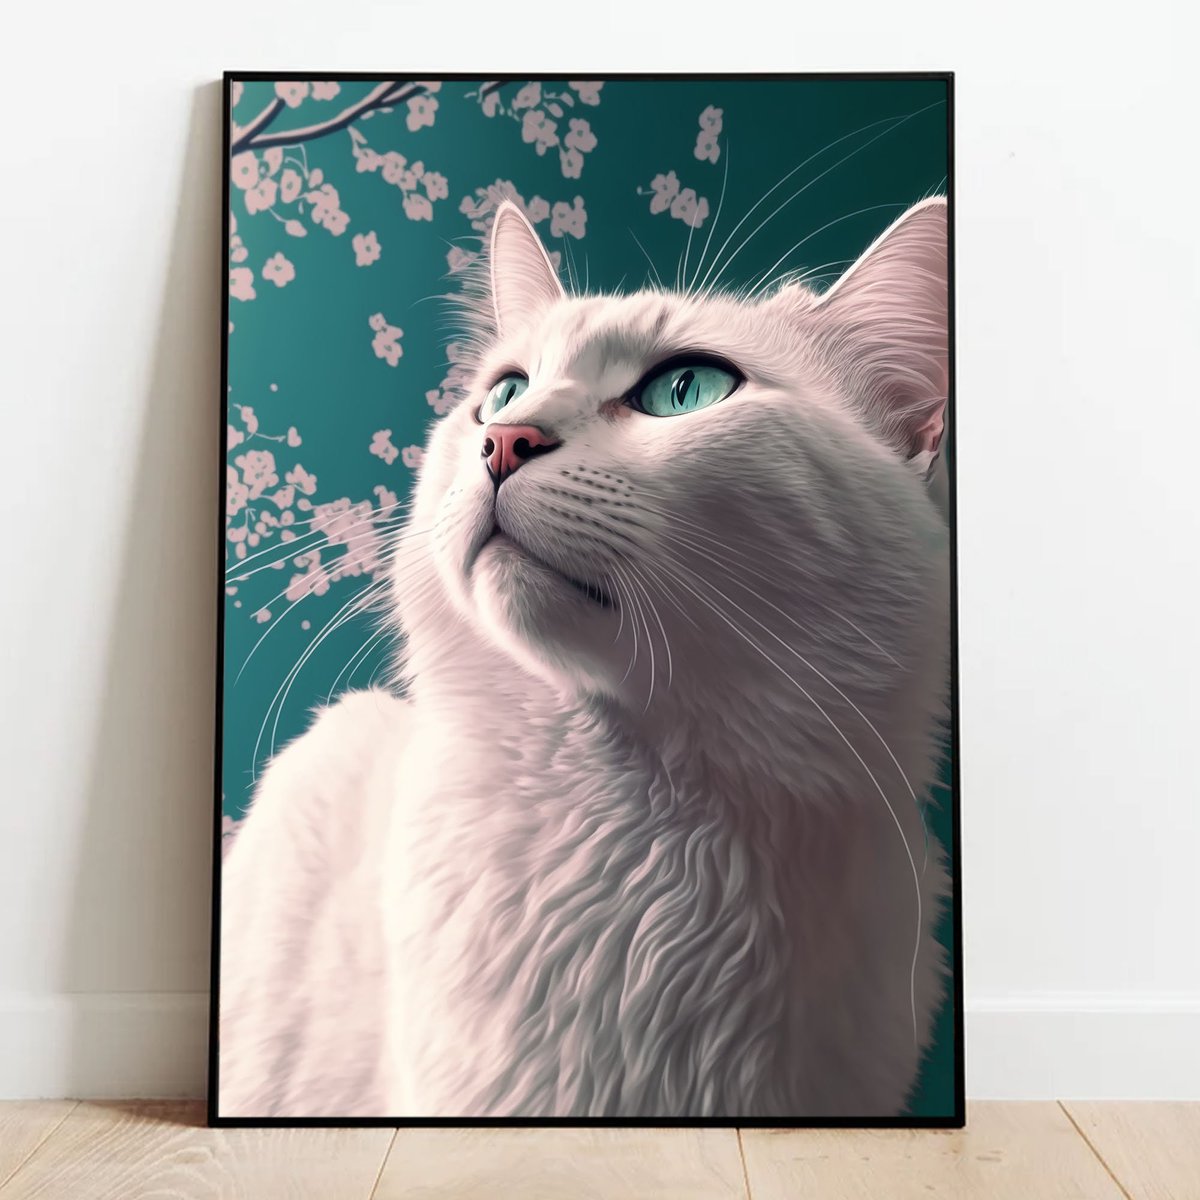 White Cat - Spring Sakura - Home Comic Style - Downloadable Artwork etsy.me/3WKLgFB #CatsArt #Cats #CatOwners #CatsLovers #WhiteCat #sakura #GiftsForCatLovers